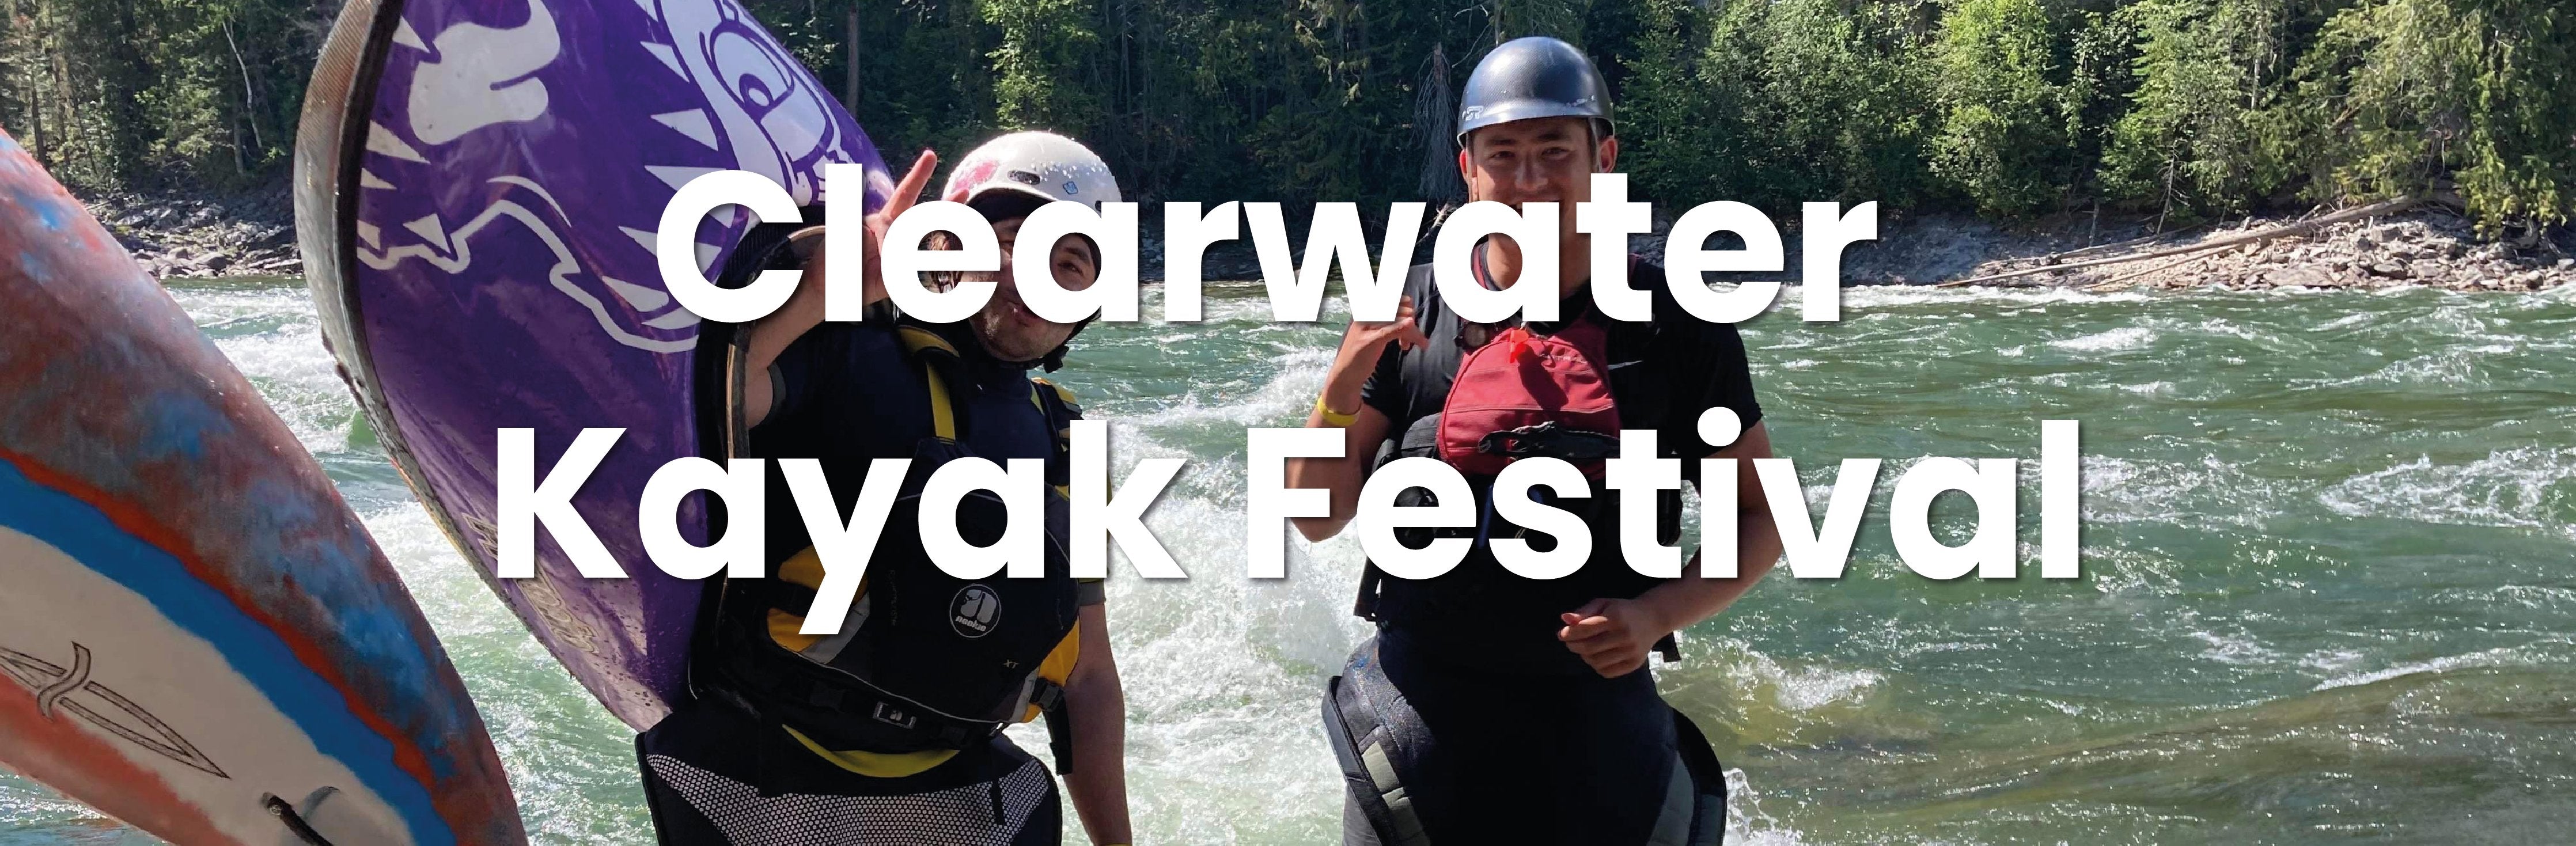 Hitting up Clearwater Kayak Festival - dewerstone